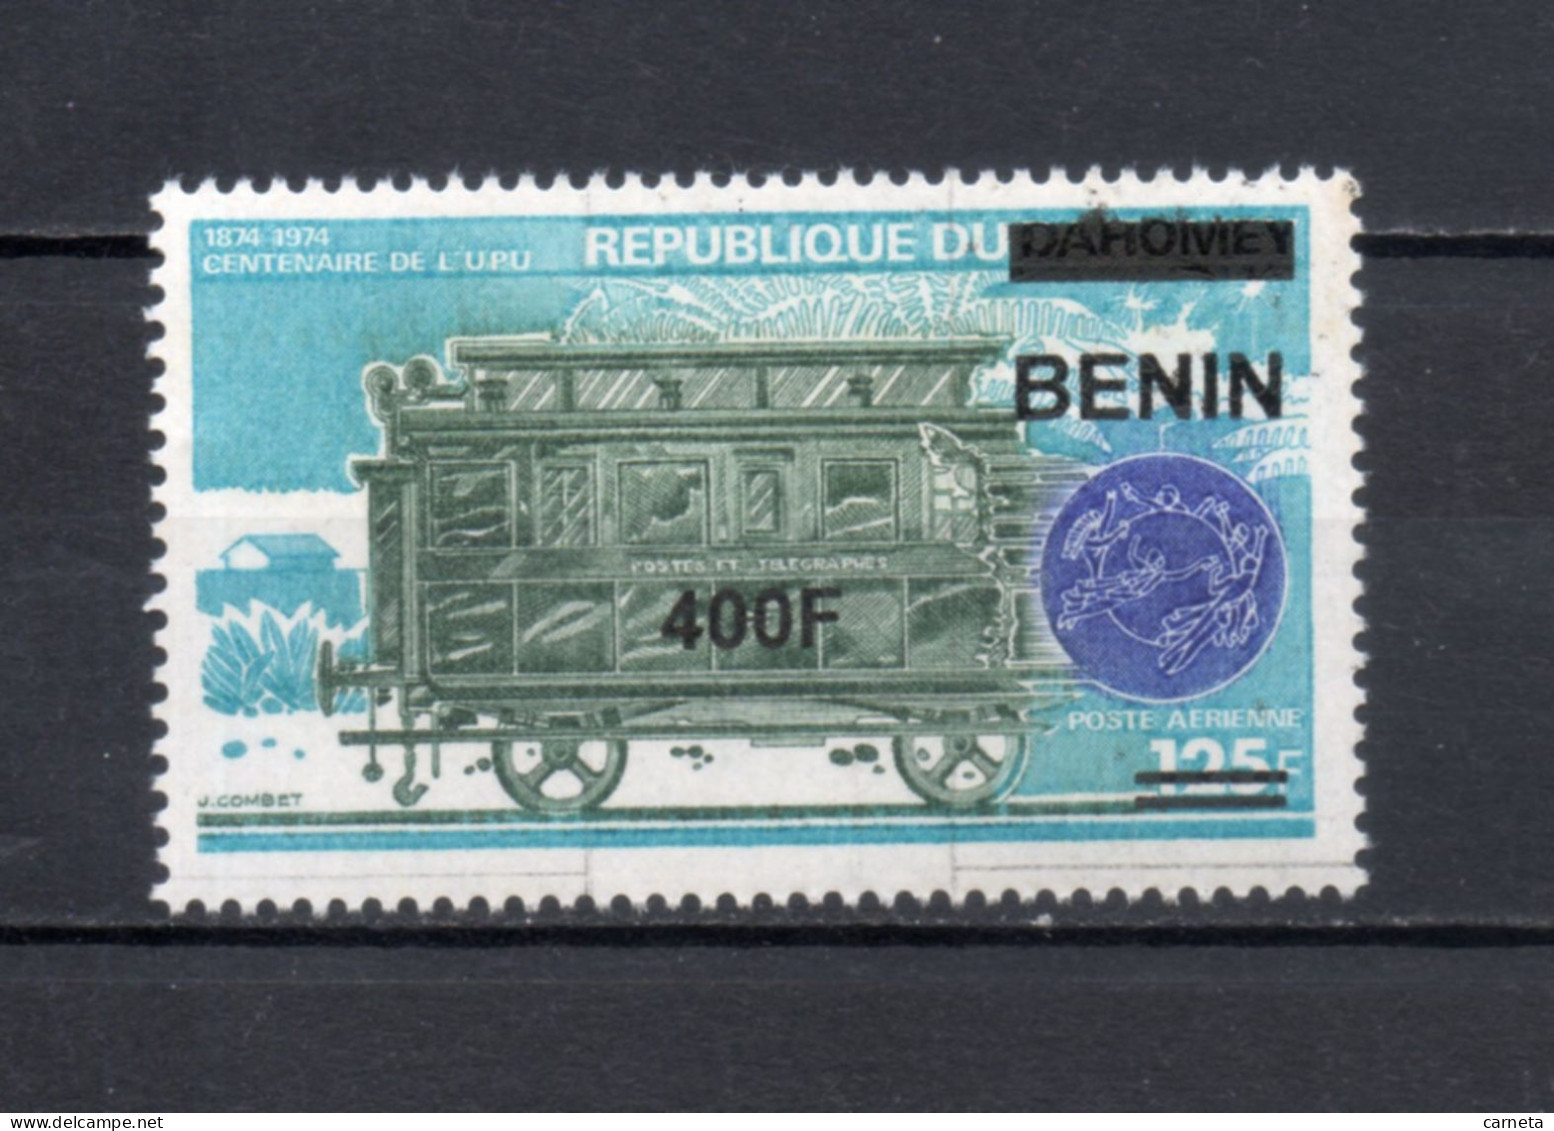 BENIN   N° 1186  NEUF SANS CHARNIERE  COTE  40.00€   TRAIN UPU  VOIR DESCRIPTION - Benin - Dahomey (1960-...)